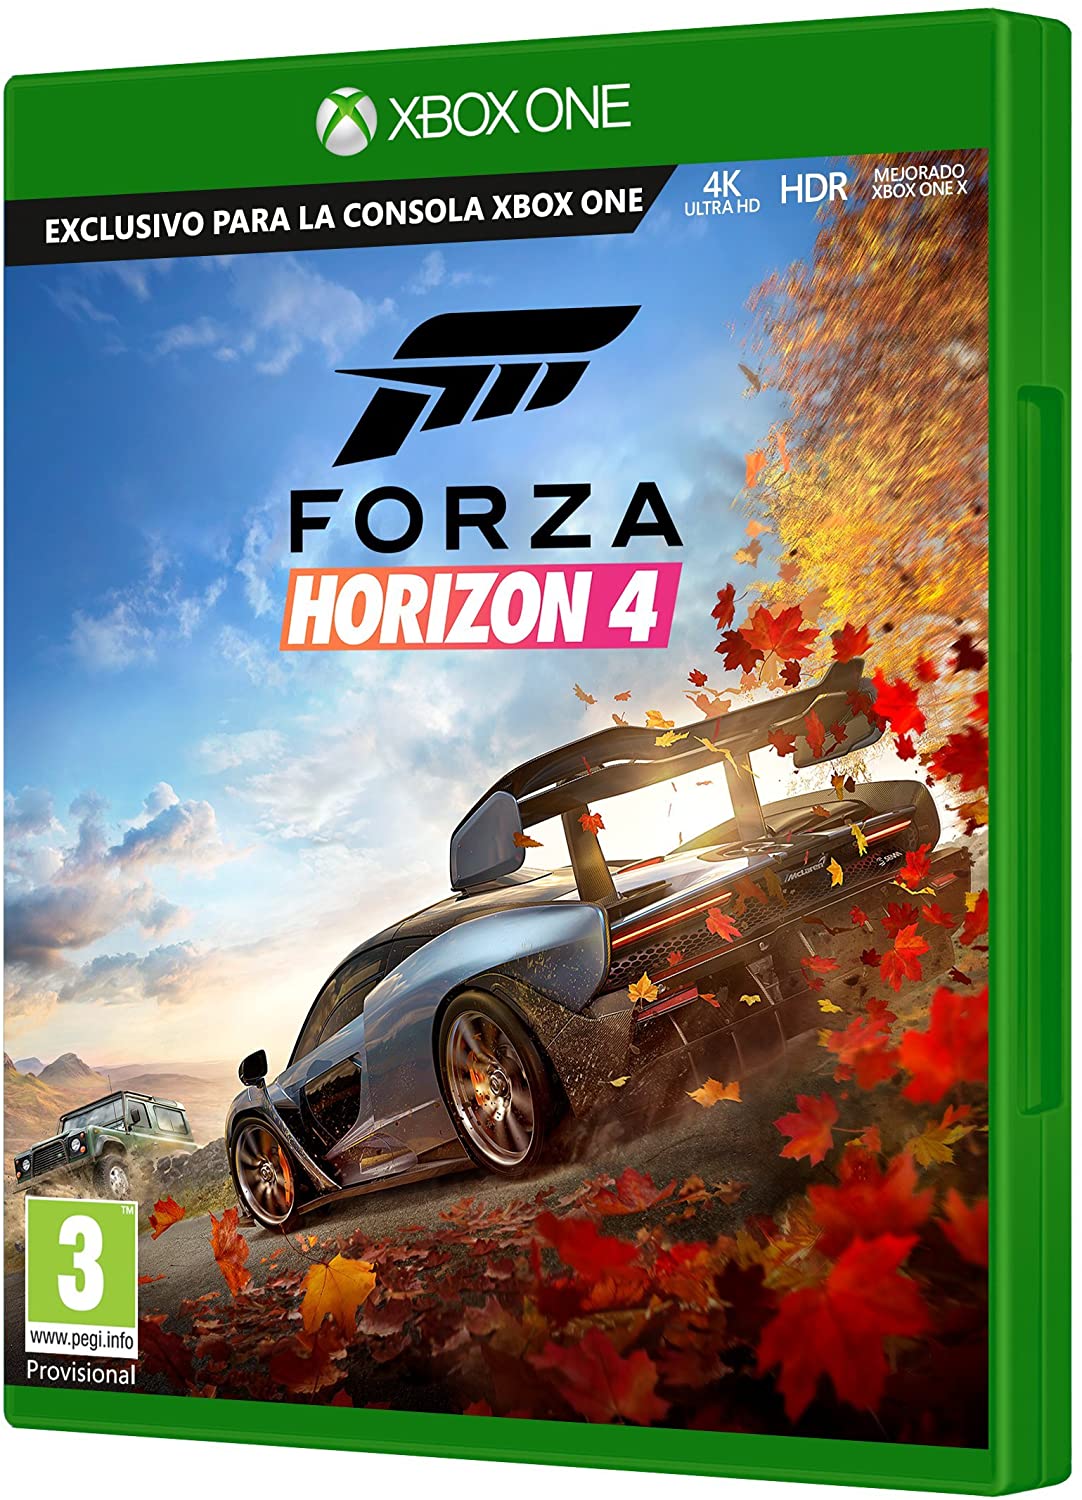 Señora Dejar abajo Jane Austen Forza Horizon 4 VPN Activated CD Key for Xbox One (Digital Download)